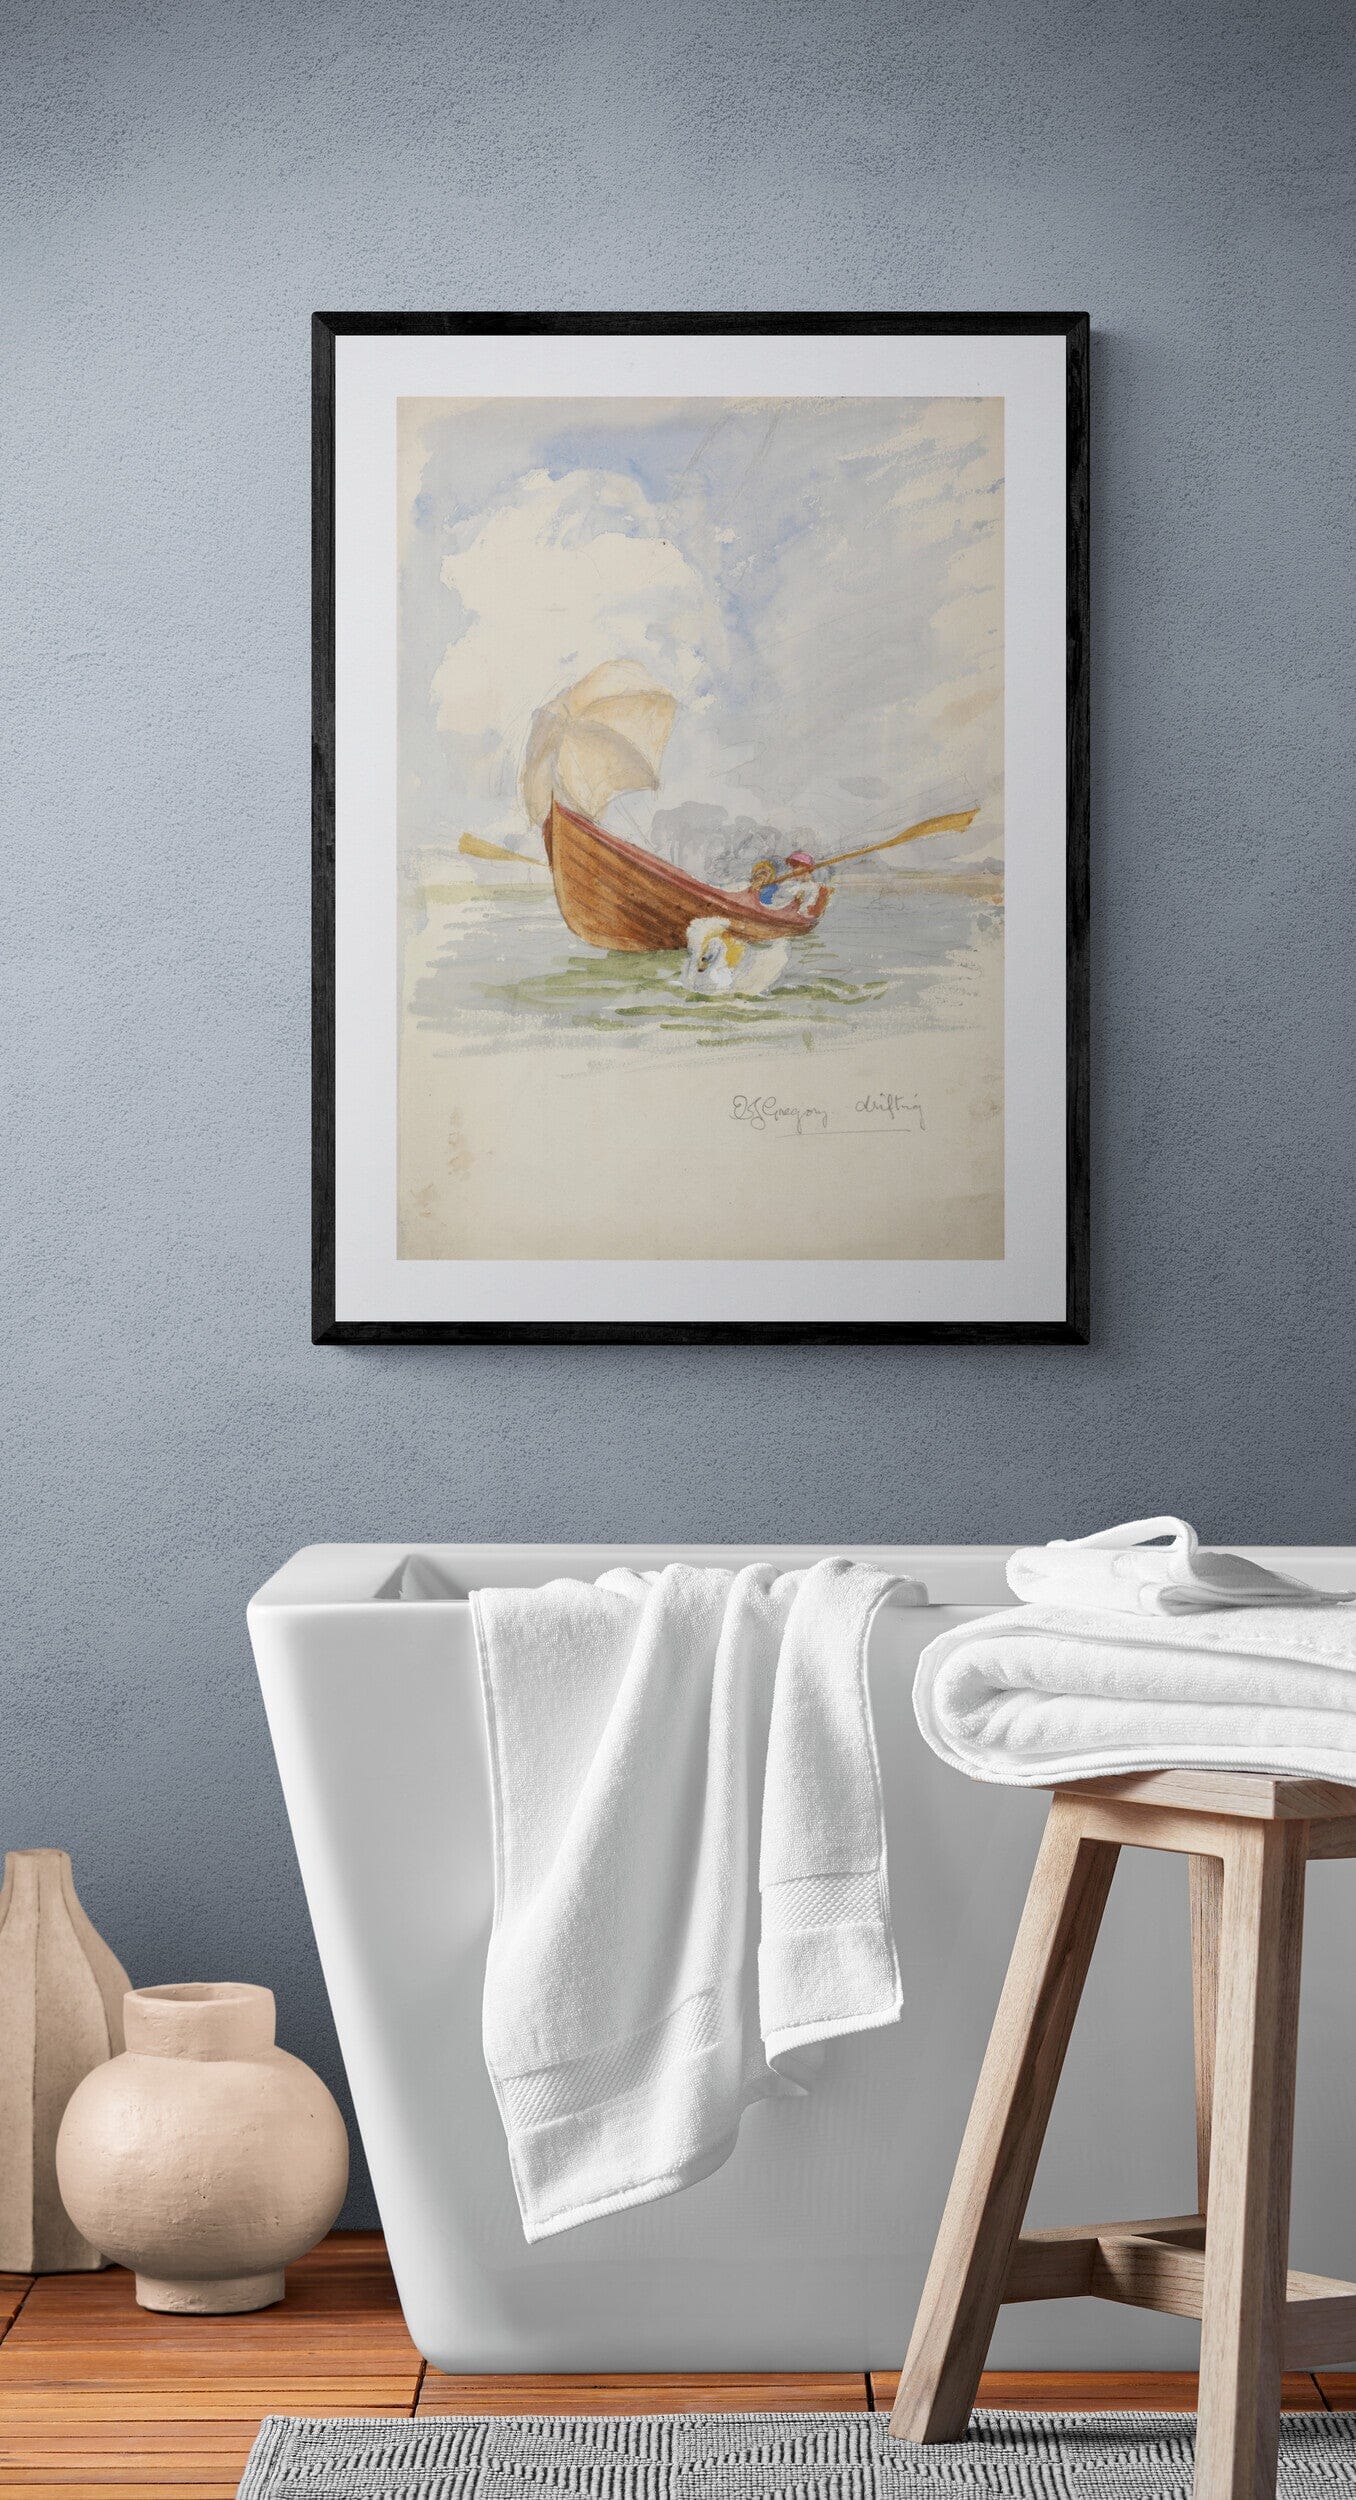 Boat Drifting (1800s) | Edward John Gregory prints Posters, Prints, & Visual Artwork The Trumpet Shop   